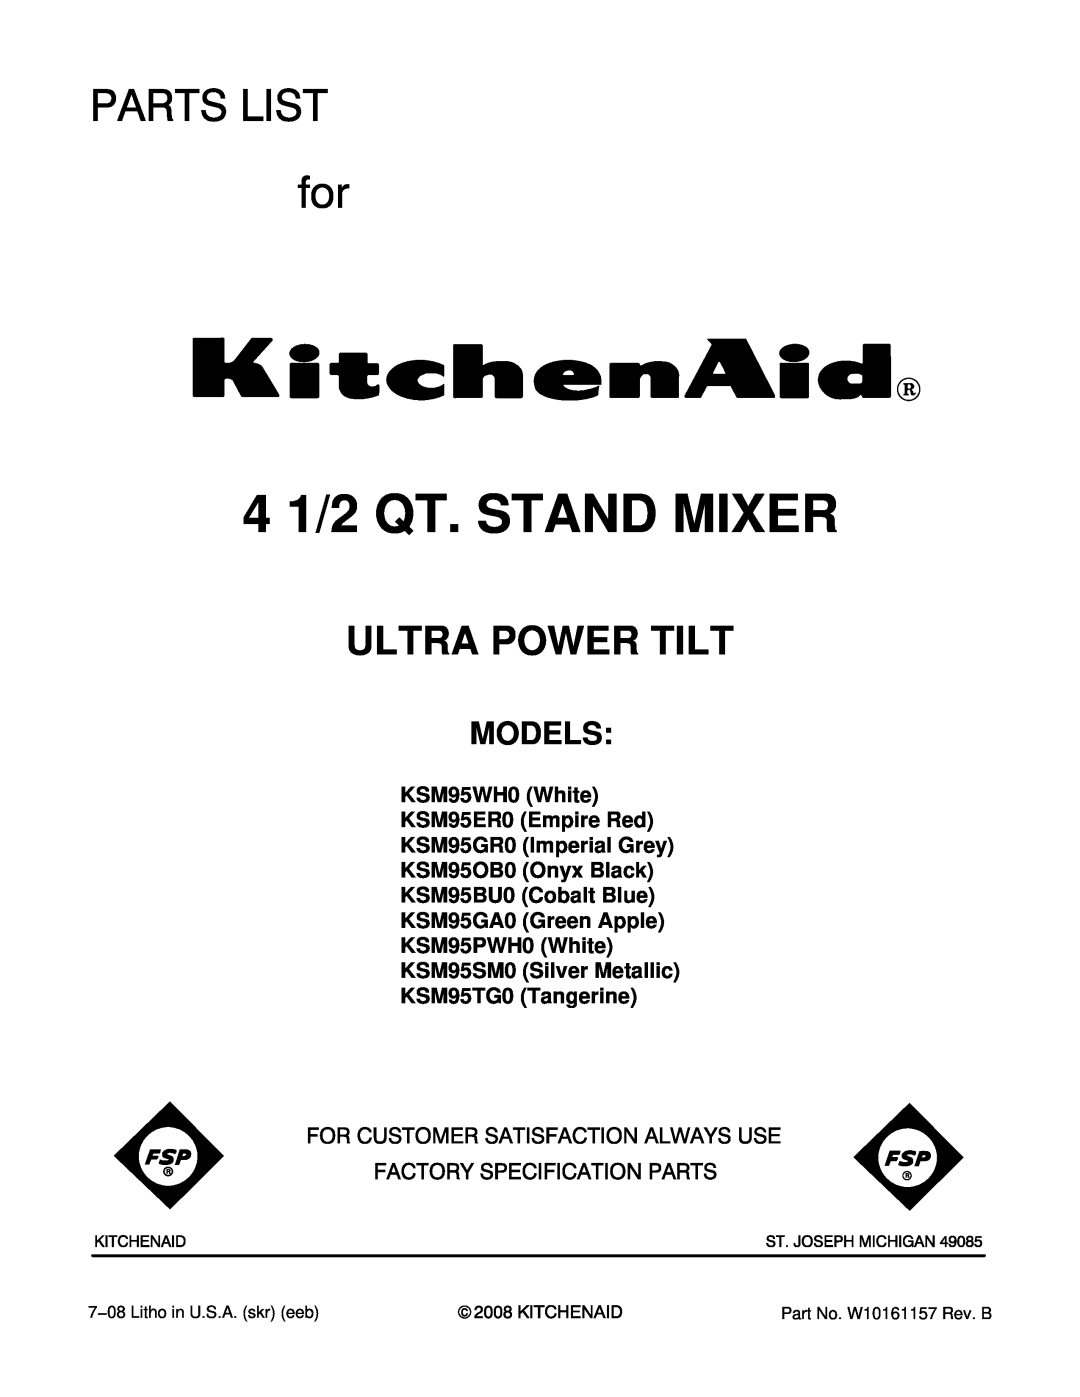 KitchenAid KSM95SM0 manual Models, KSM95WH0 White KSM95ER0 Empire Red KSM95GR0 Imperial Grey, 4 1/2 QT. STAND MIXER 